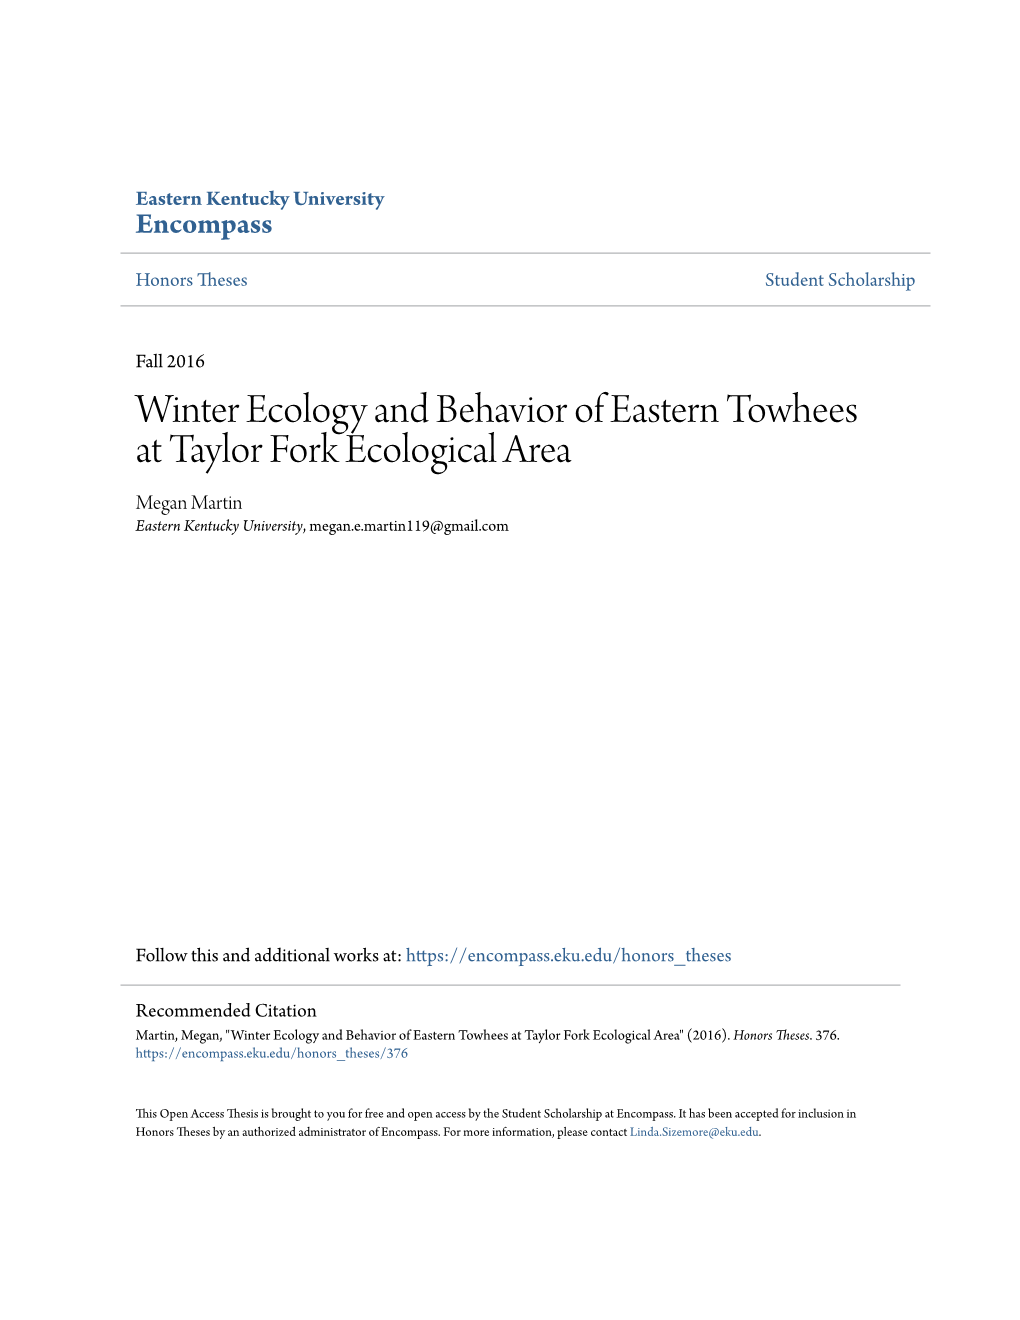 Winter Ecology and Behavior of Eastern Towhees at Taylor Fork Ecological Area Megan Martin Eastern Kentucky University, Megan.E.Martin119@Gmail.Com